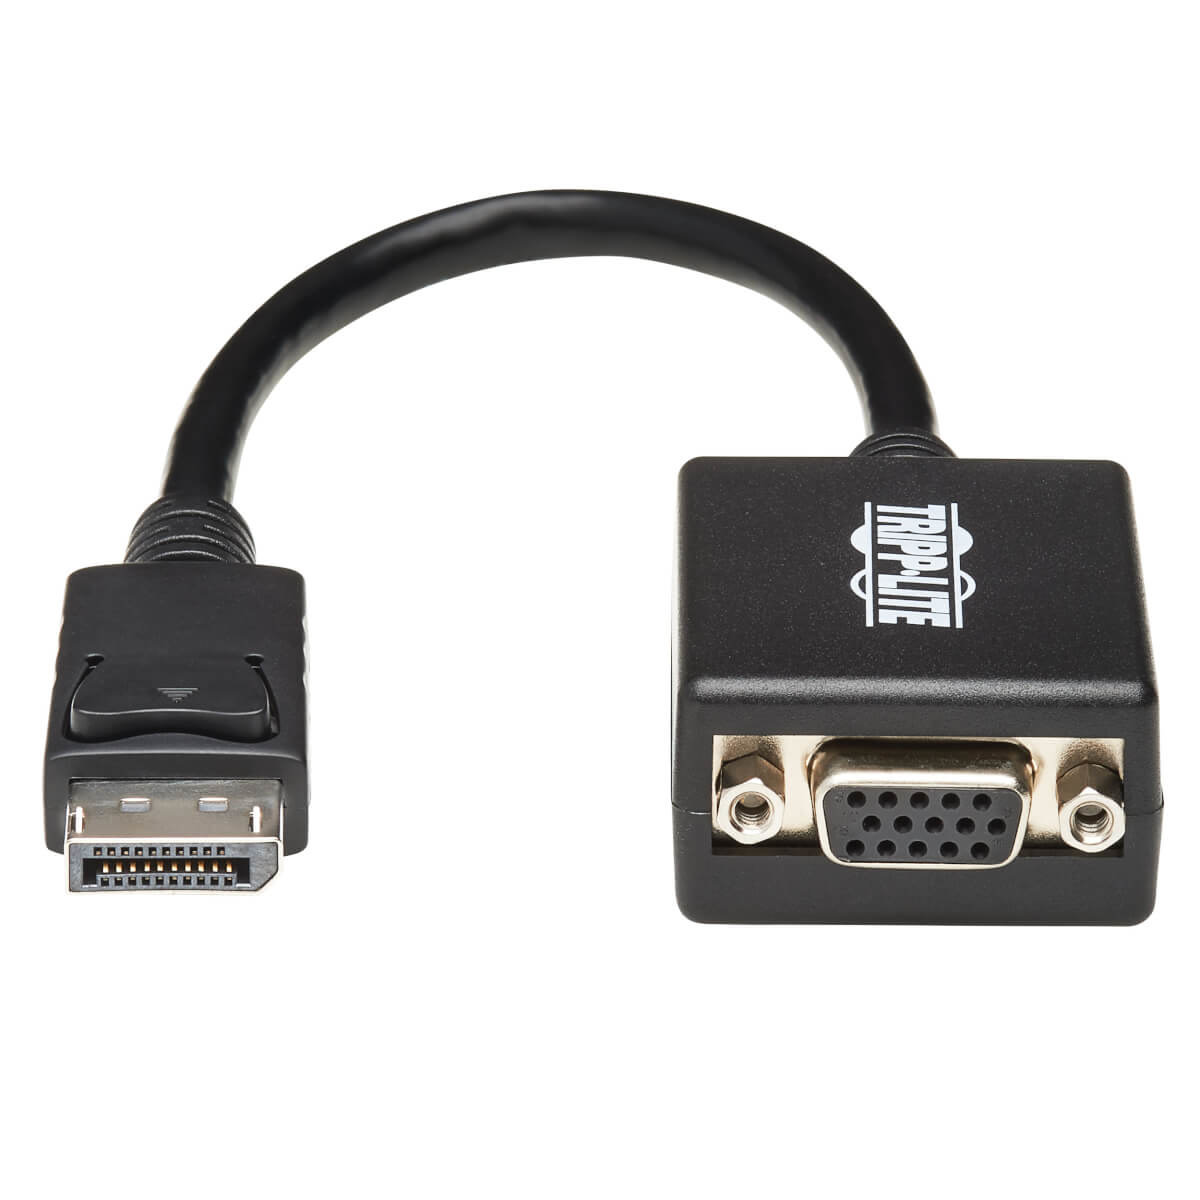 DisplayPort Male to VGA Female Adapter